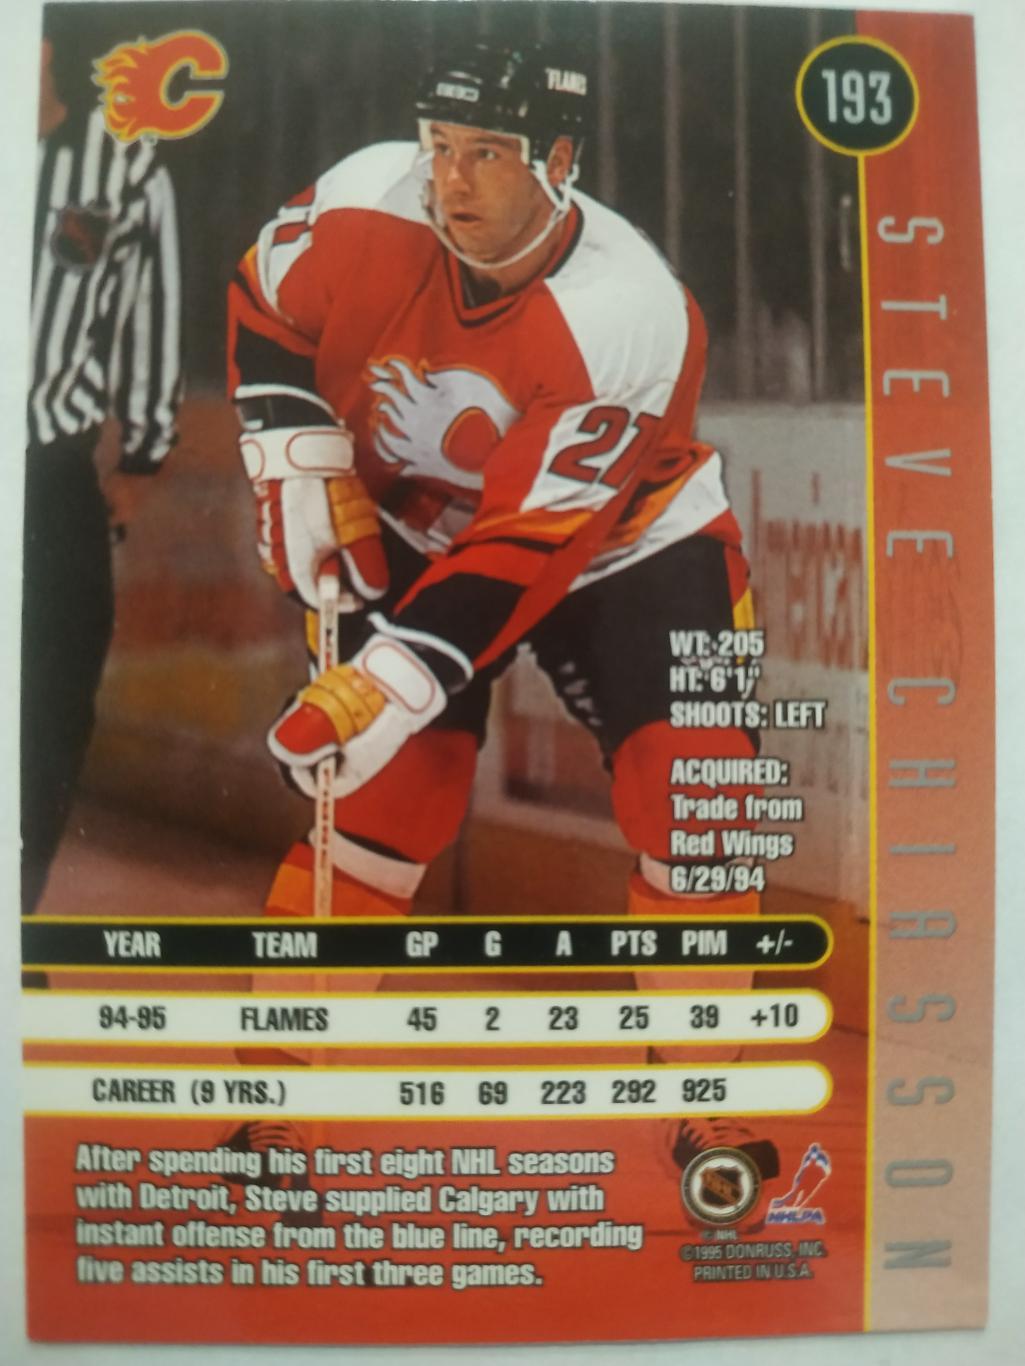 ХОККЕЙ КАРТОЧКА НХЛ DONRUSS LEAF 1995-96 STEVE CHIASSON CALGARY FLAMES #193 1